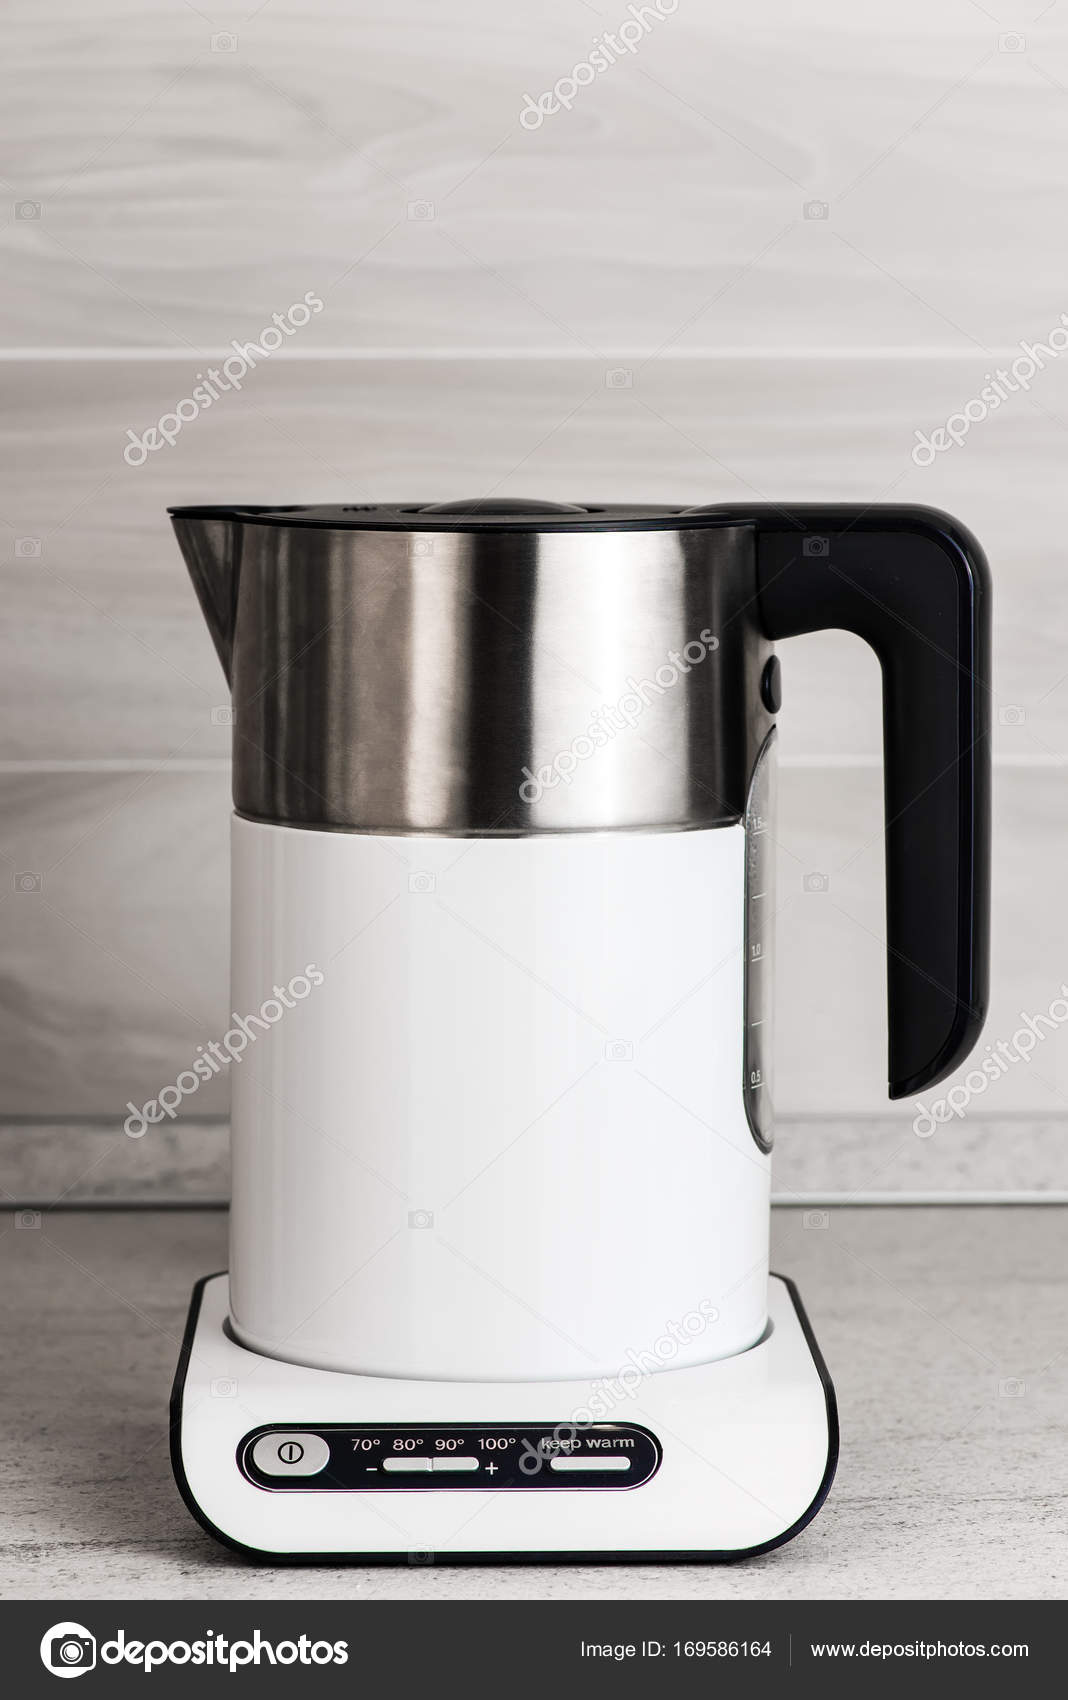 https://st3.depositphotos.com/1606977/16958/i/1600/depositphotos_169586164-stock-photo-white-modern-electric-kettle-in.jpg